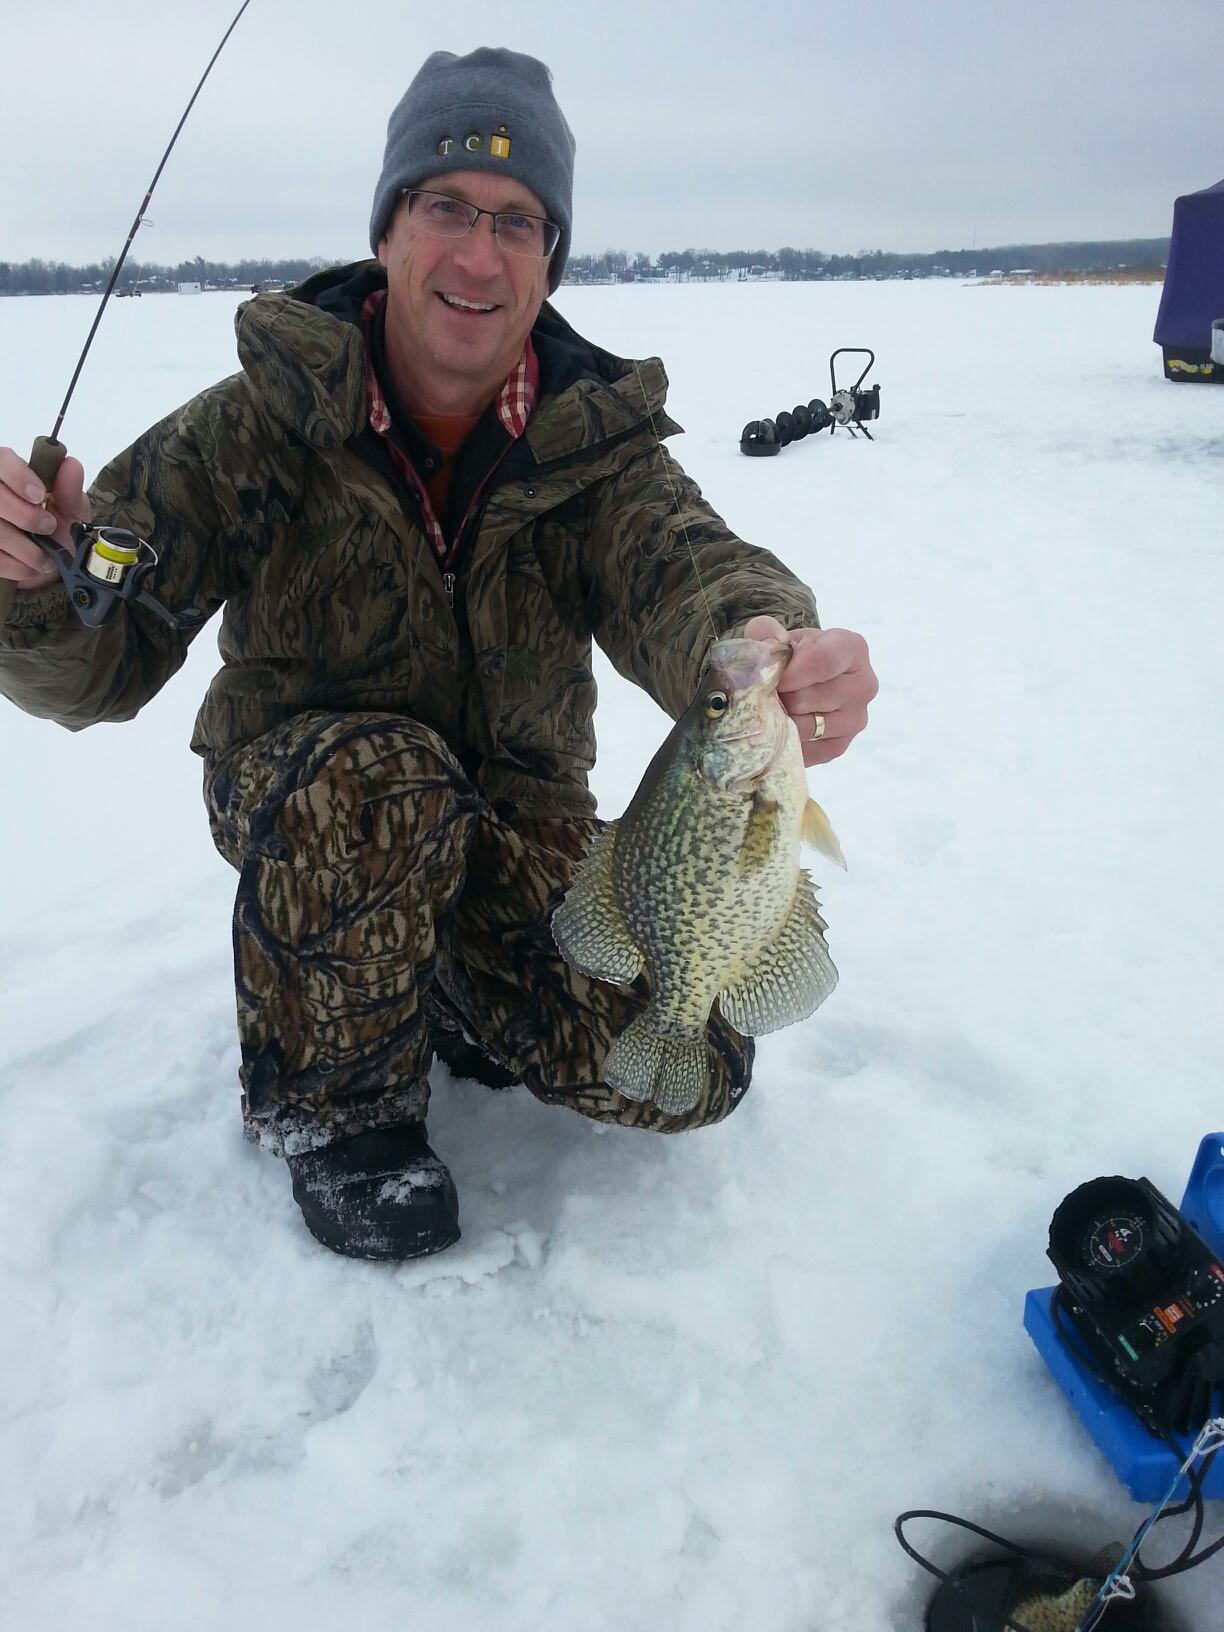 Kevin Nelson ice fishing near St. Joseph, MN